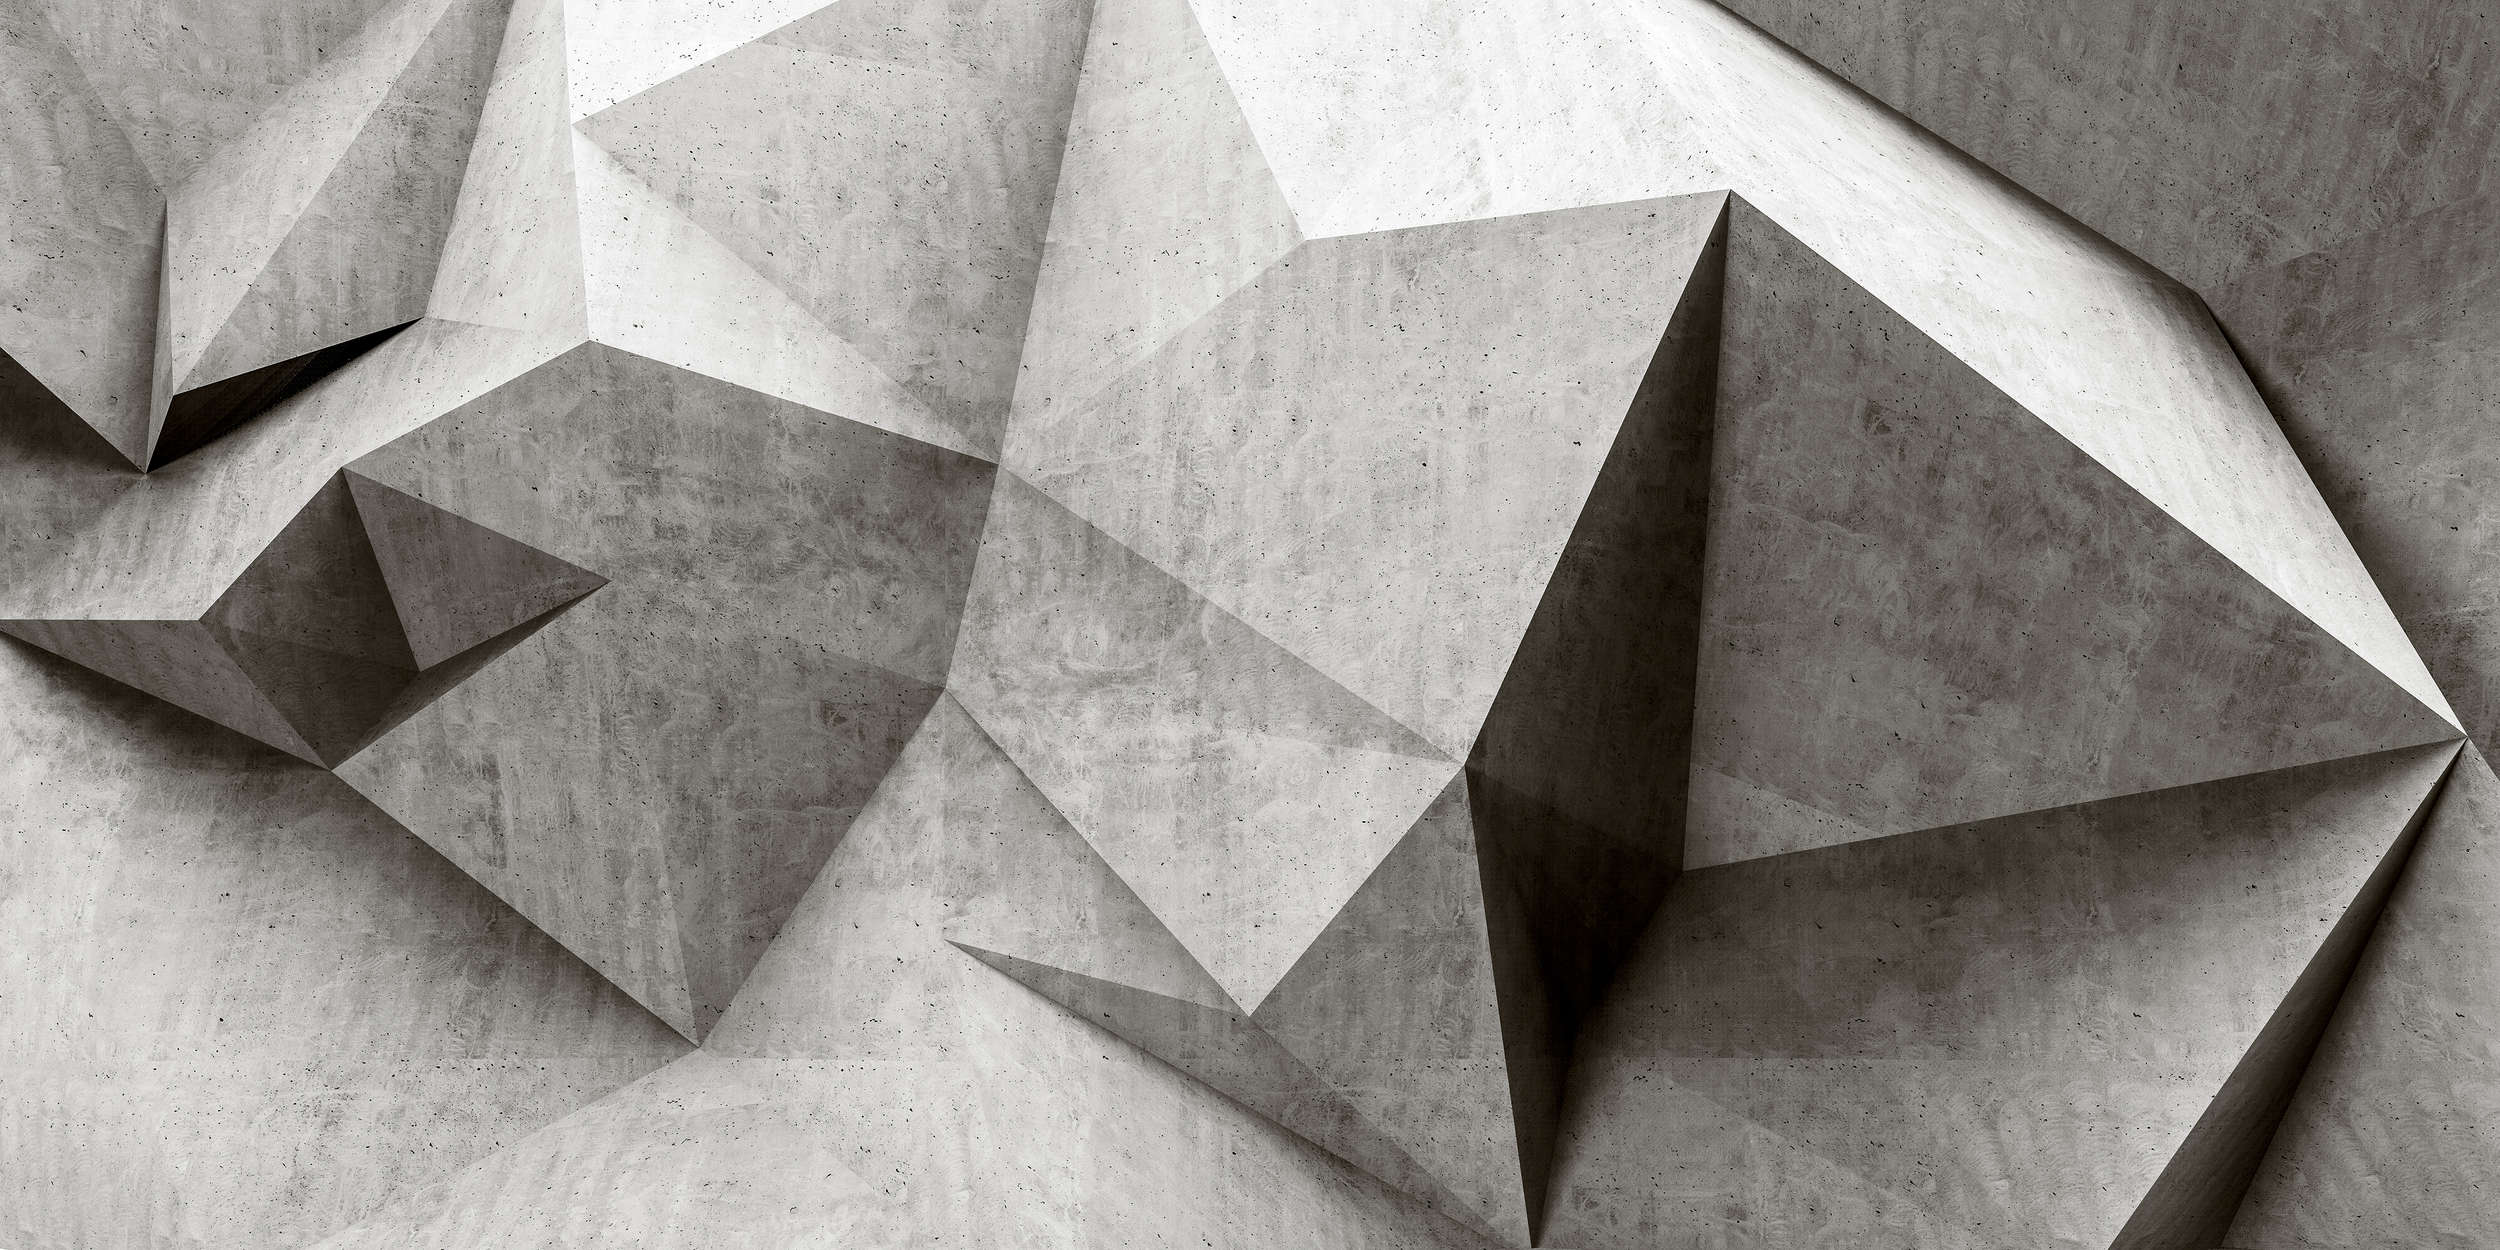             Boulder 1 - Cool 3D Concrete Polygons Wallpaper - Grey, Black | Premium Smooth Non-woven
        